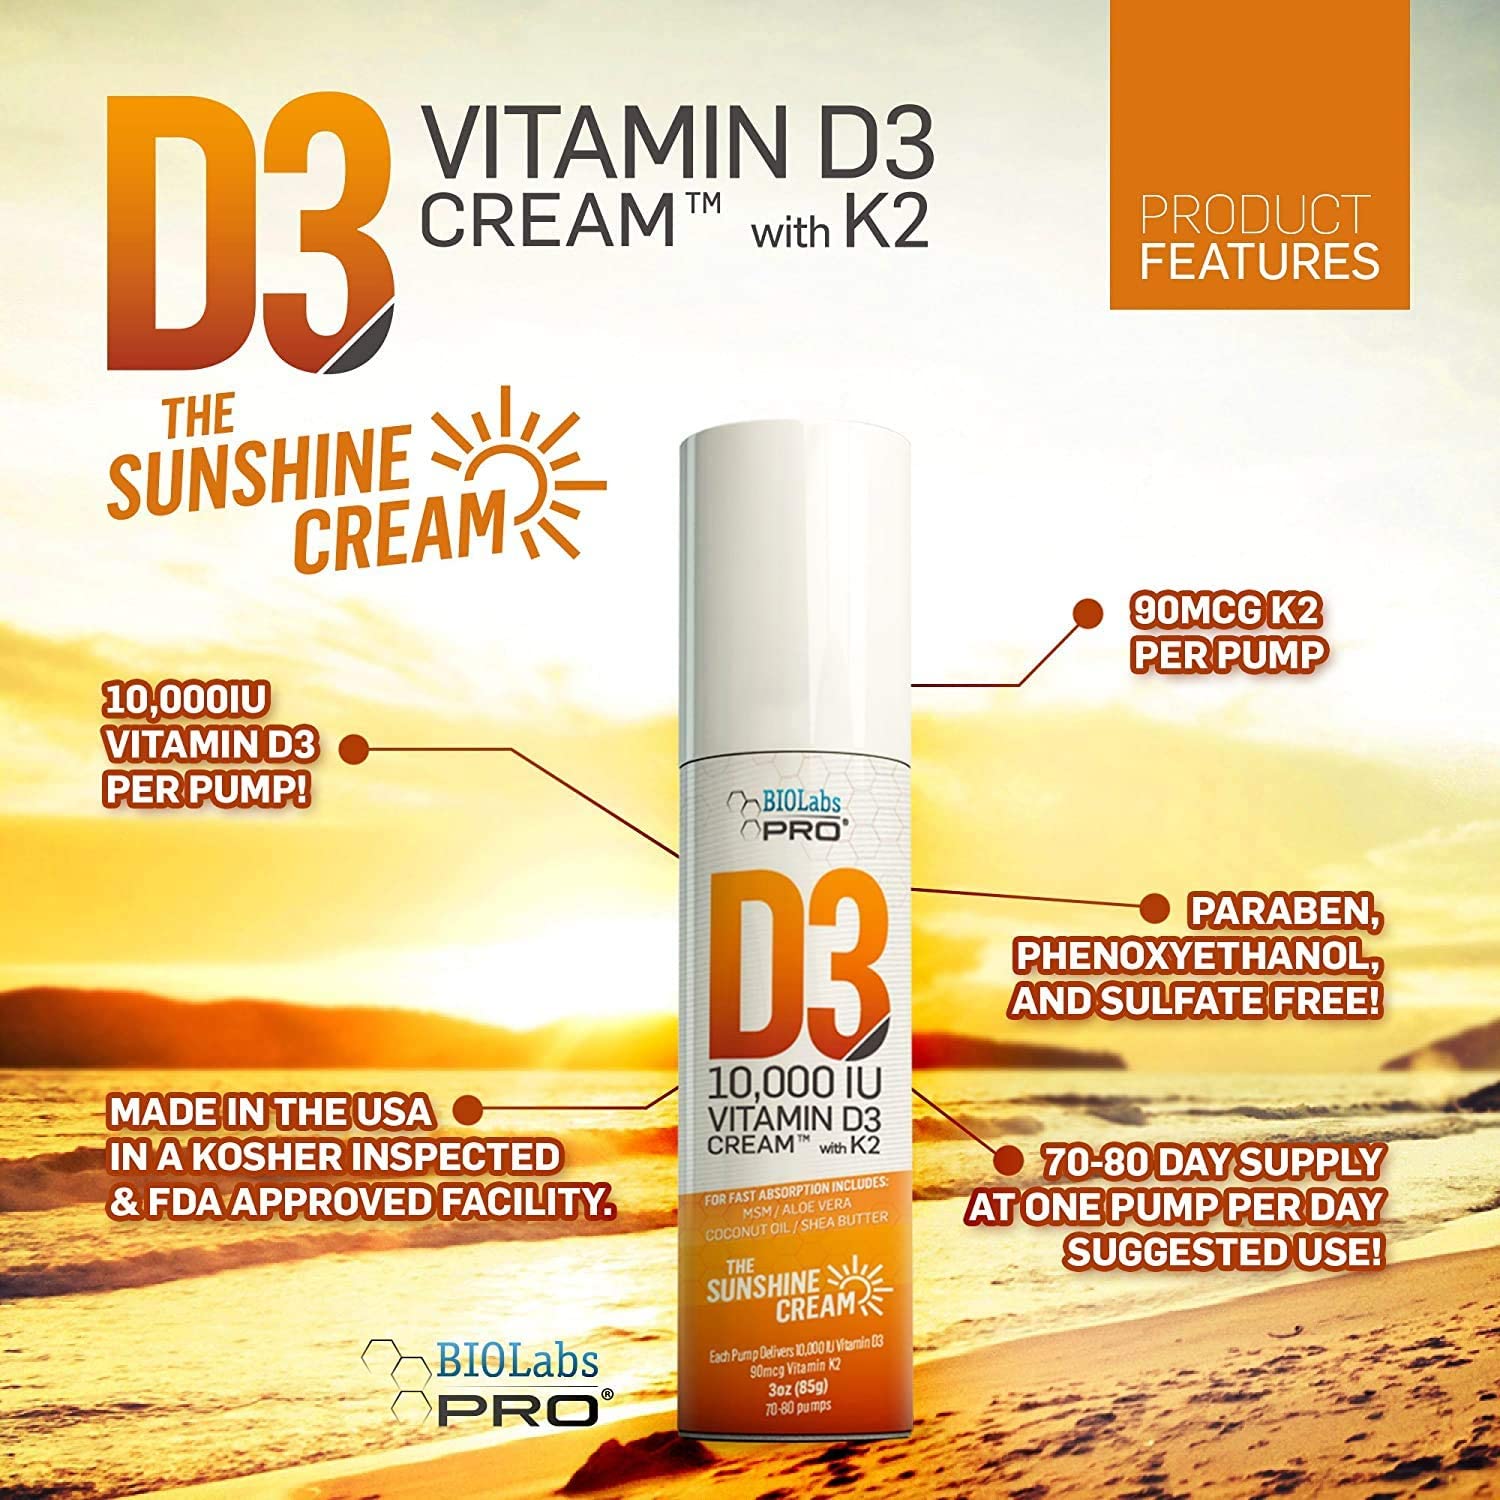 10,000 IU Vitamin D3 Psoriasis Cream REVIEWS